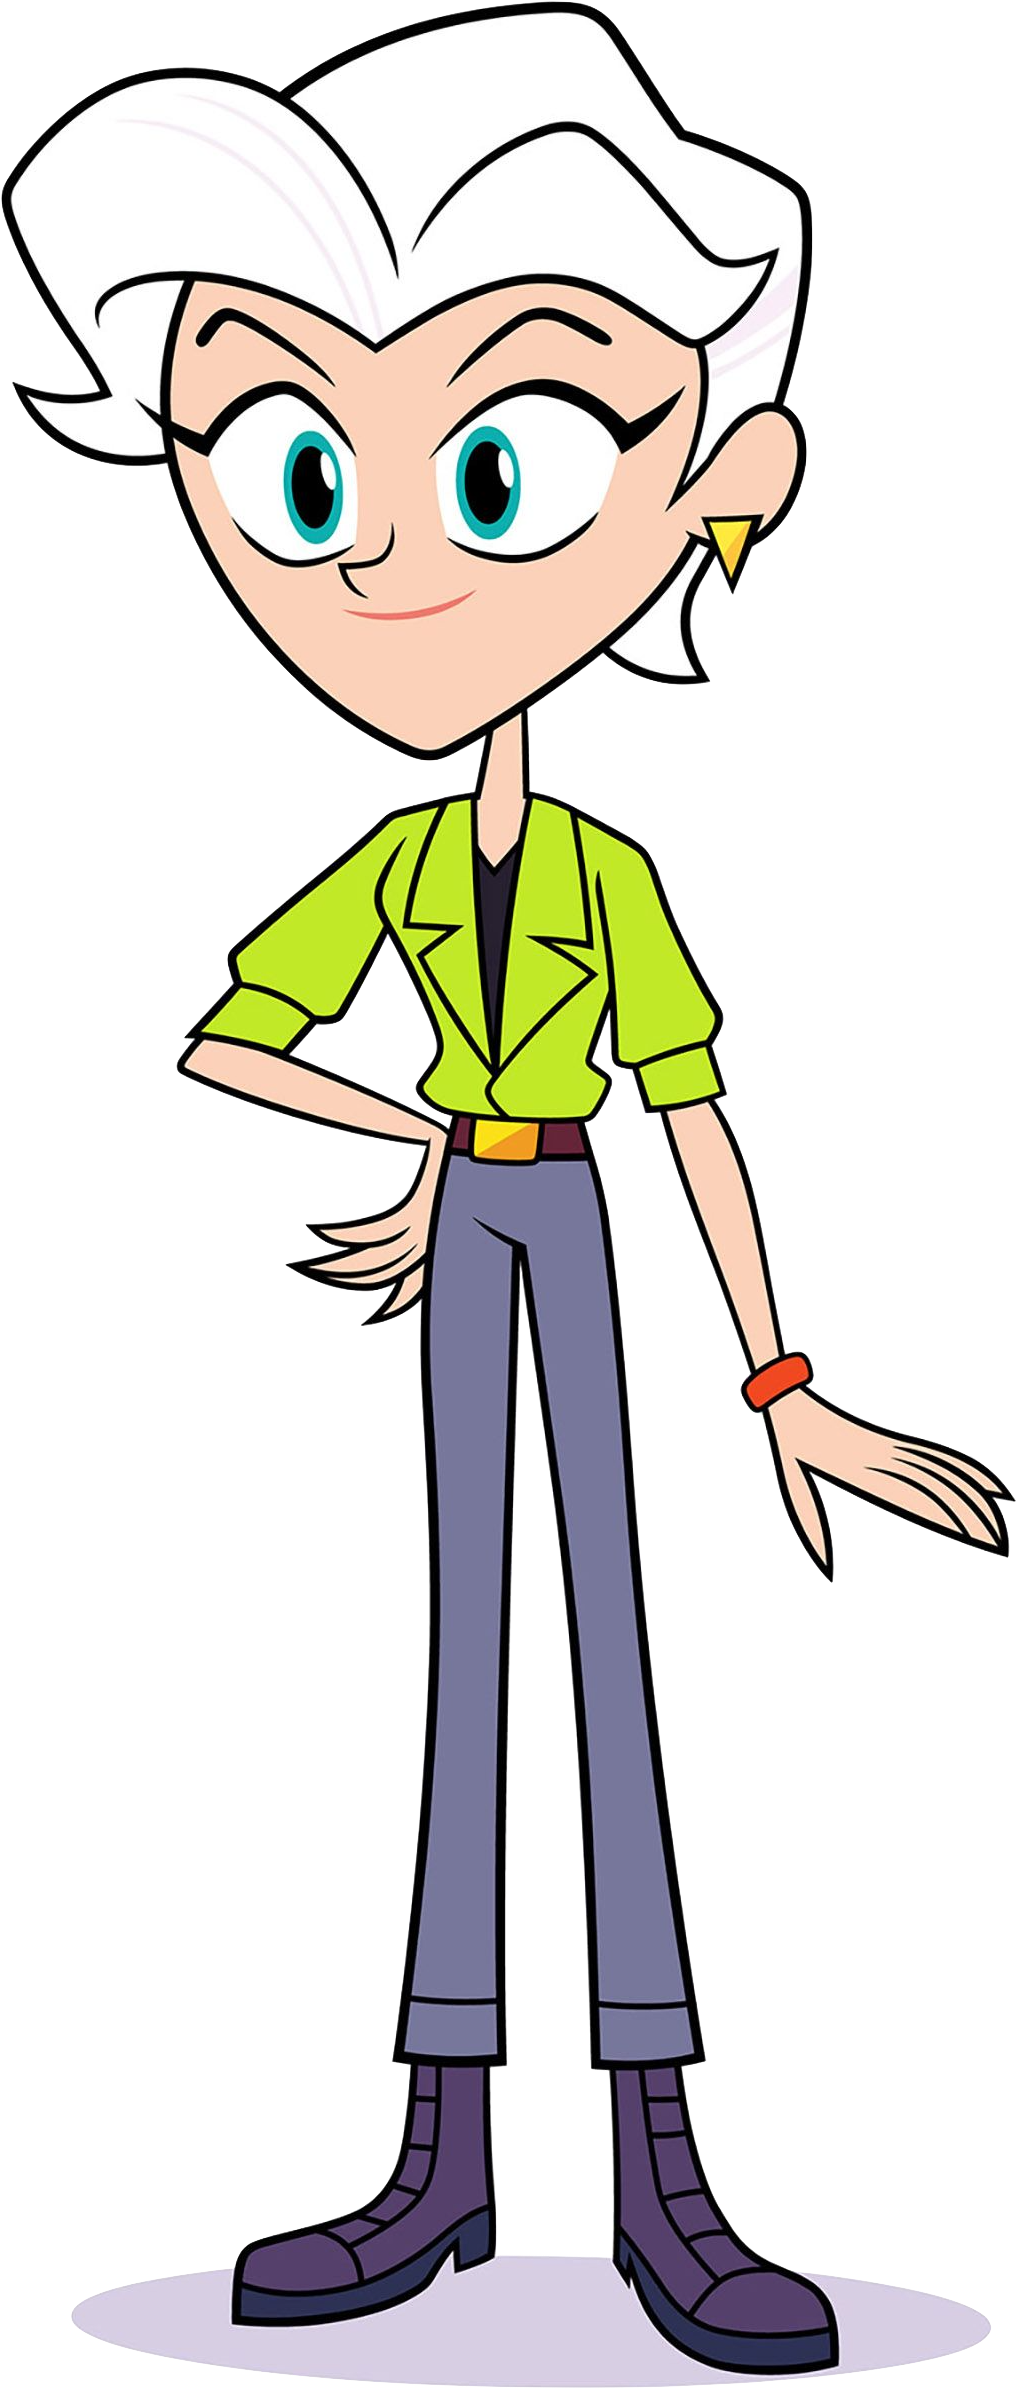 Animated Teen Character Standing